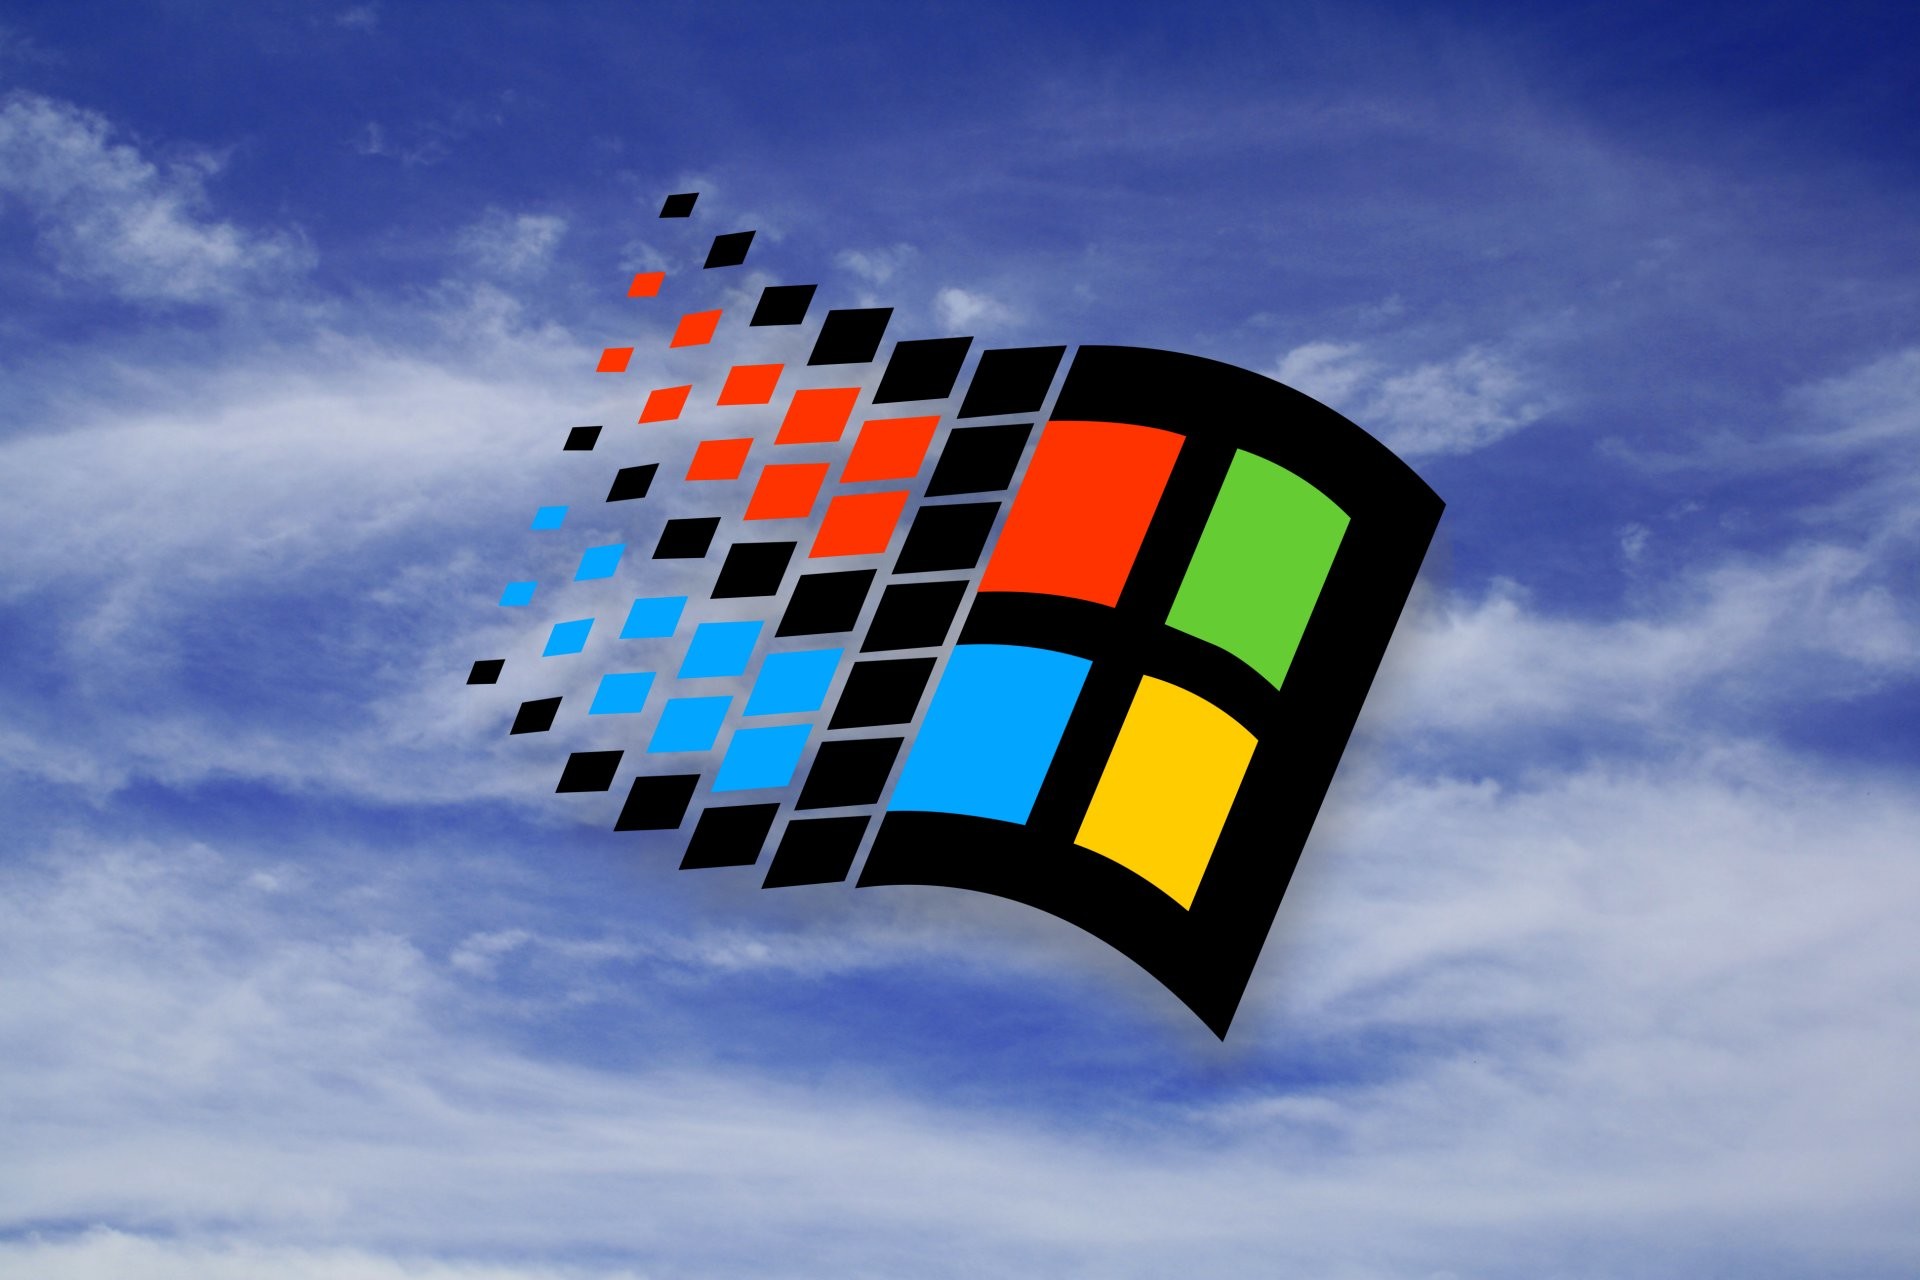 windows 95 wallpaper,rubik's cube,sky,logo,graphics,toy